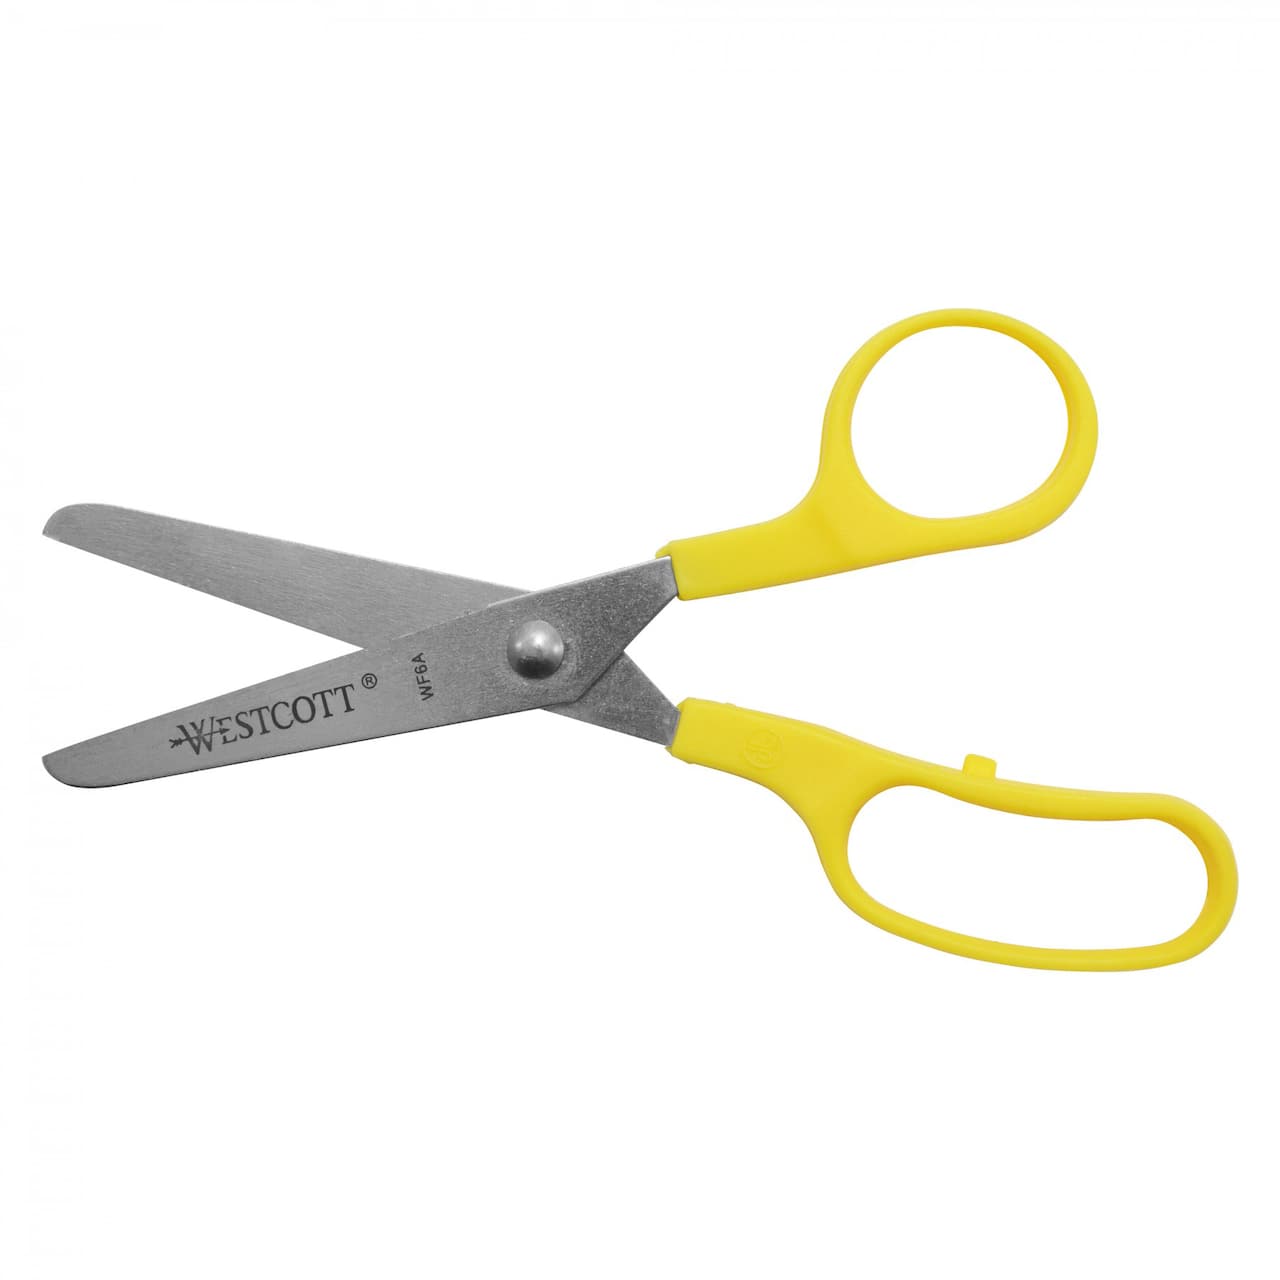 Westcott Scissors, Pointed Tip